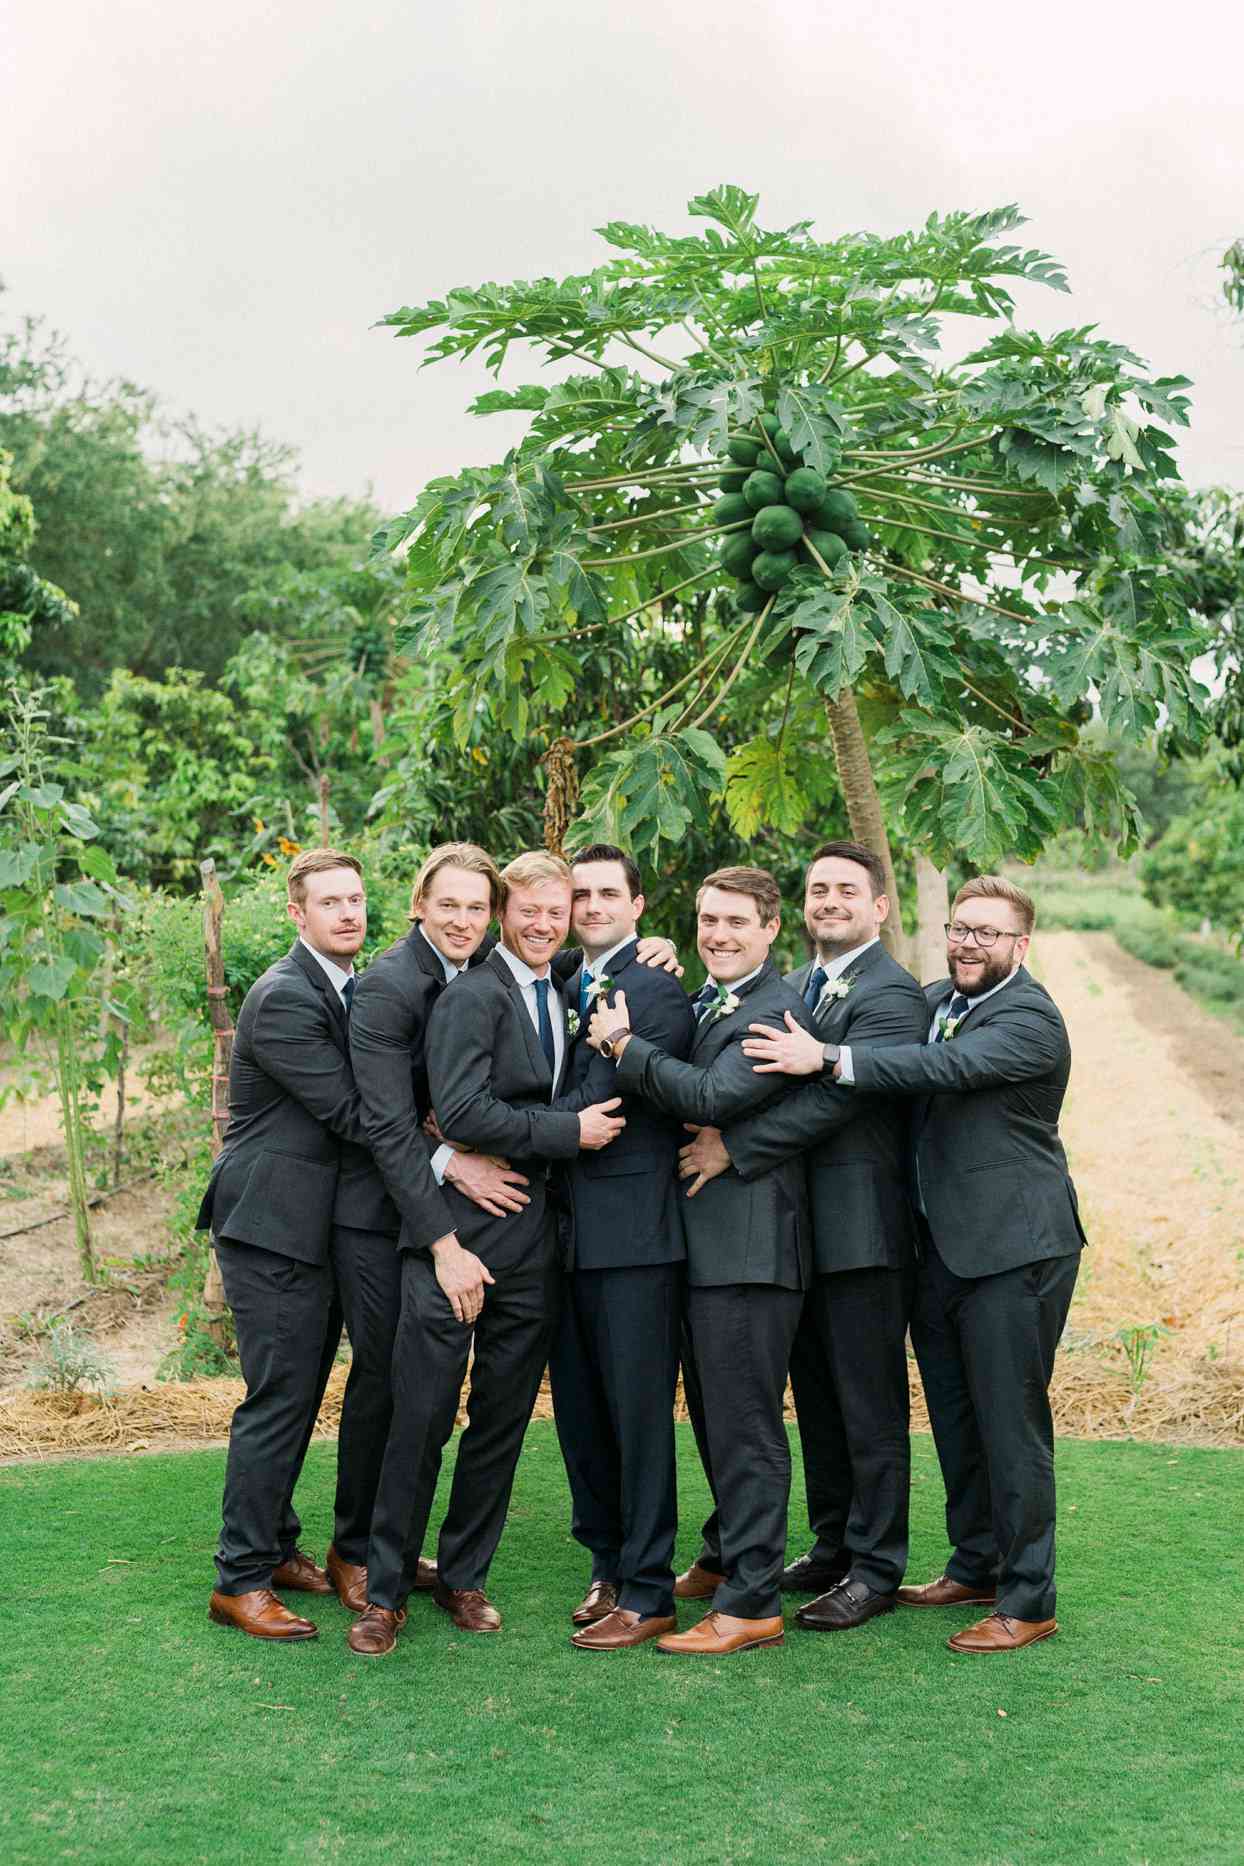 groomsmen posing in black suits and brown shoes